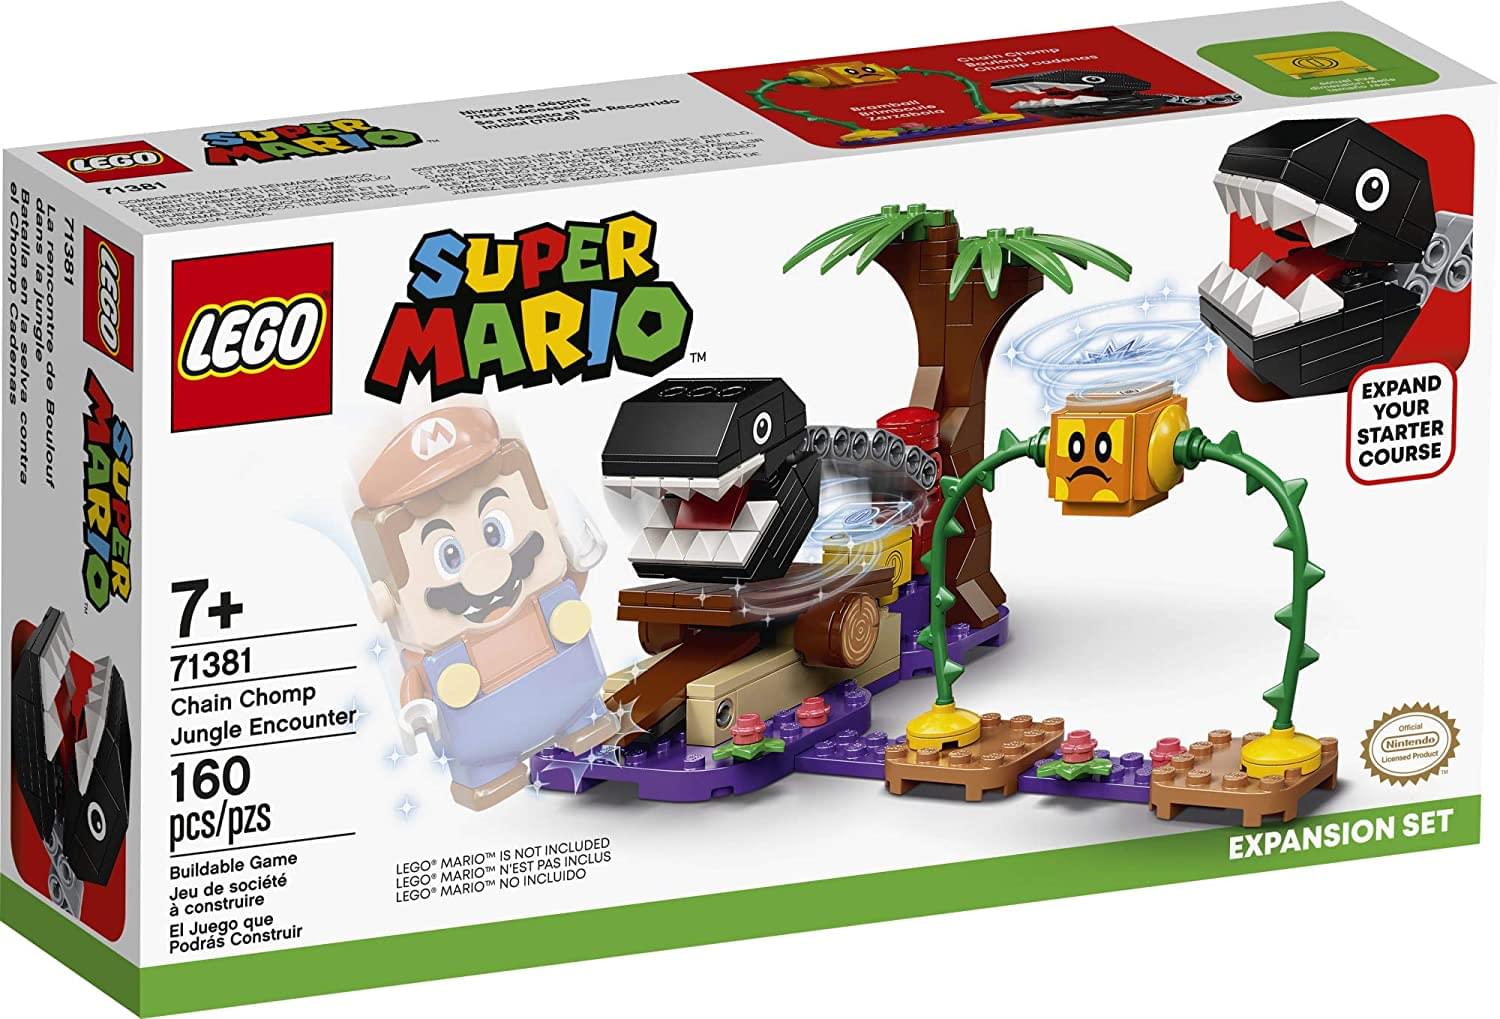 LEGO Super Mario 71381 Chain Chomp Jungle Encounter 160 Piece Expansion Set